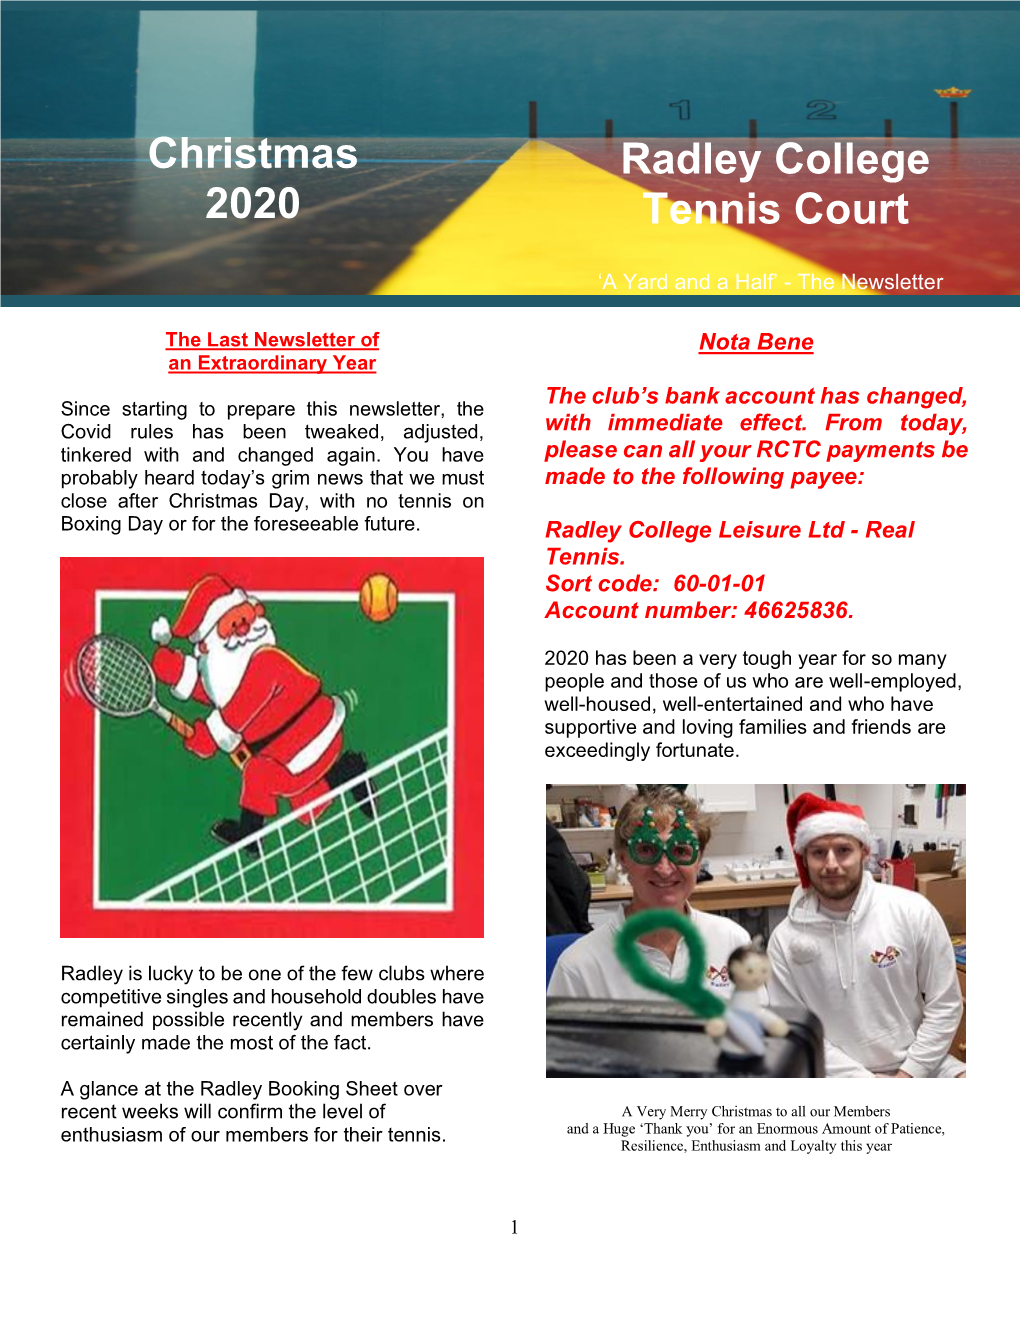 Radley College Tennis Court Christmas 2020